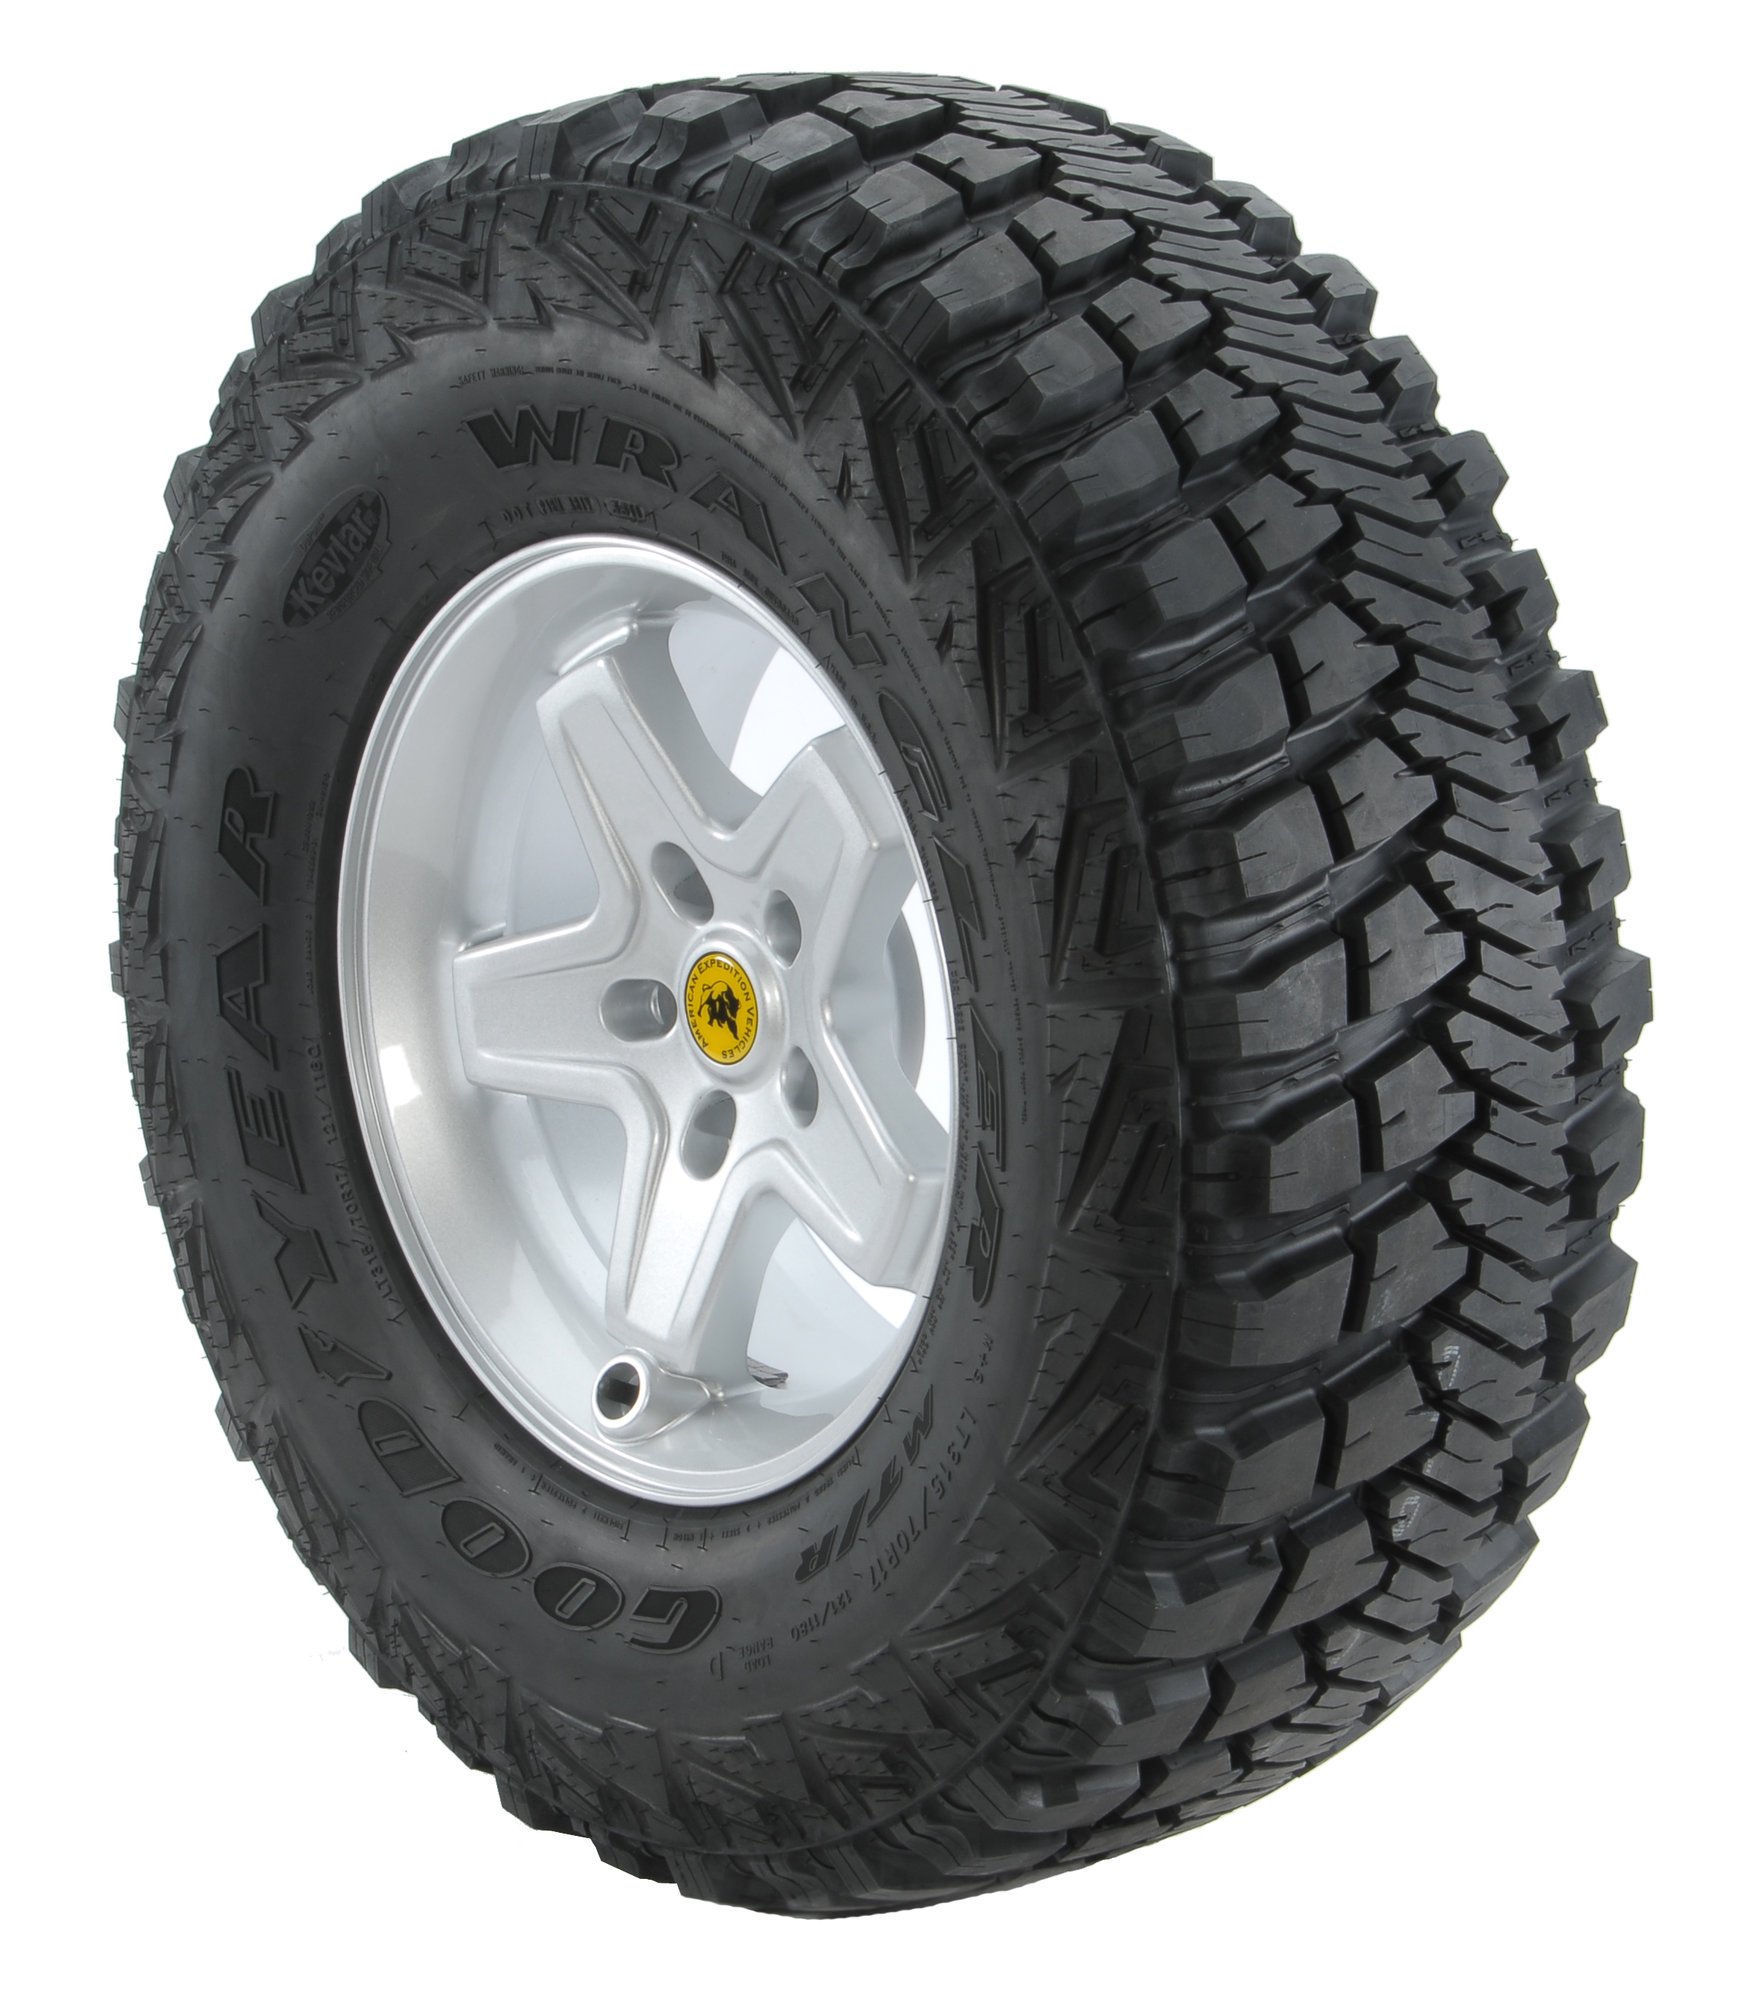 Goodyear Wrangler MT/R Tire with Kevlar | Quadratec